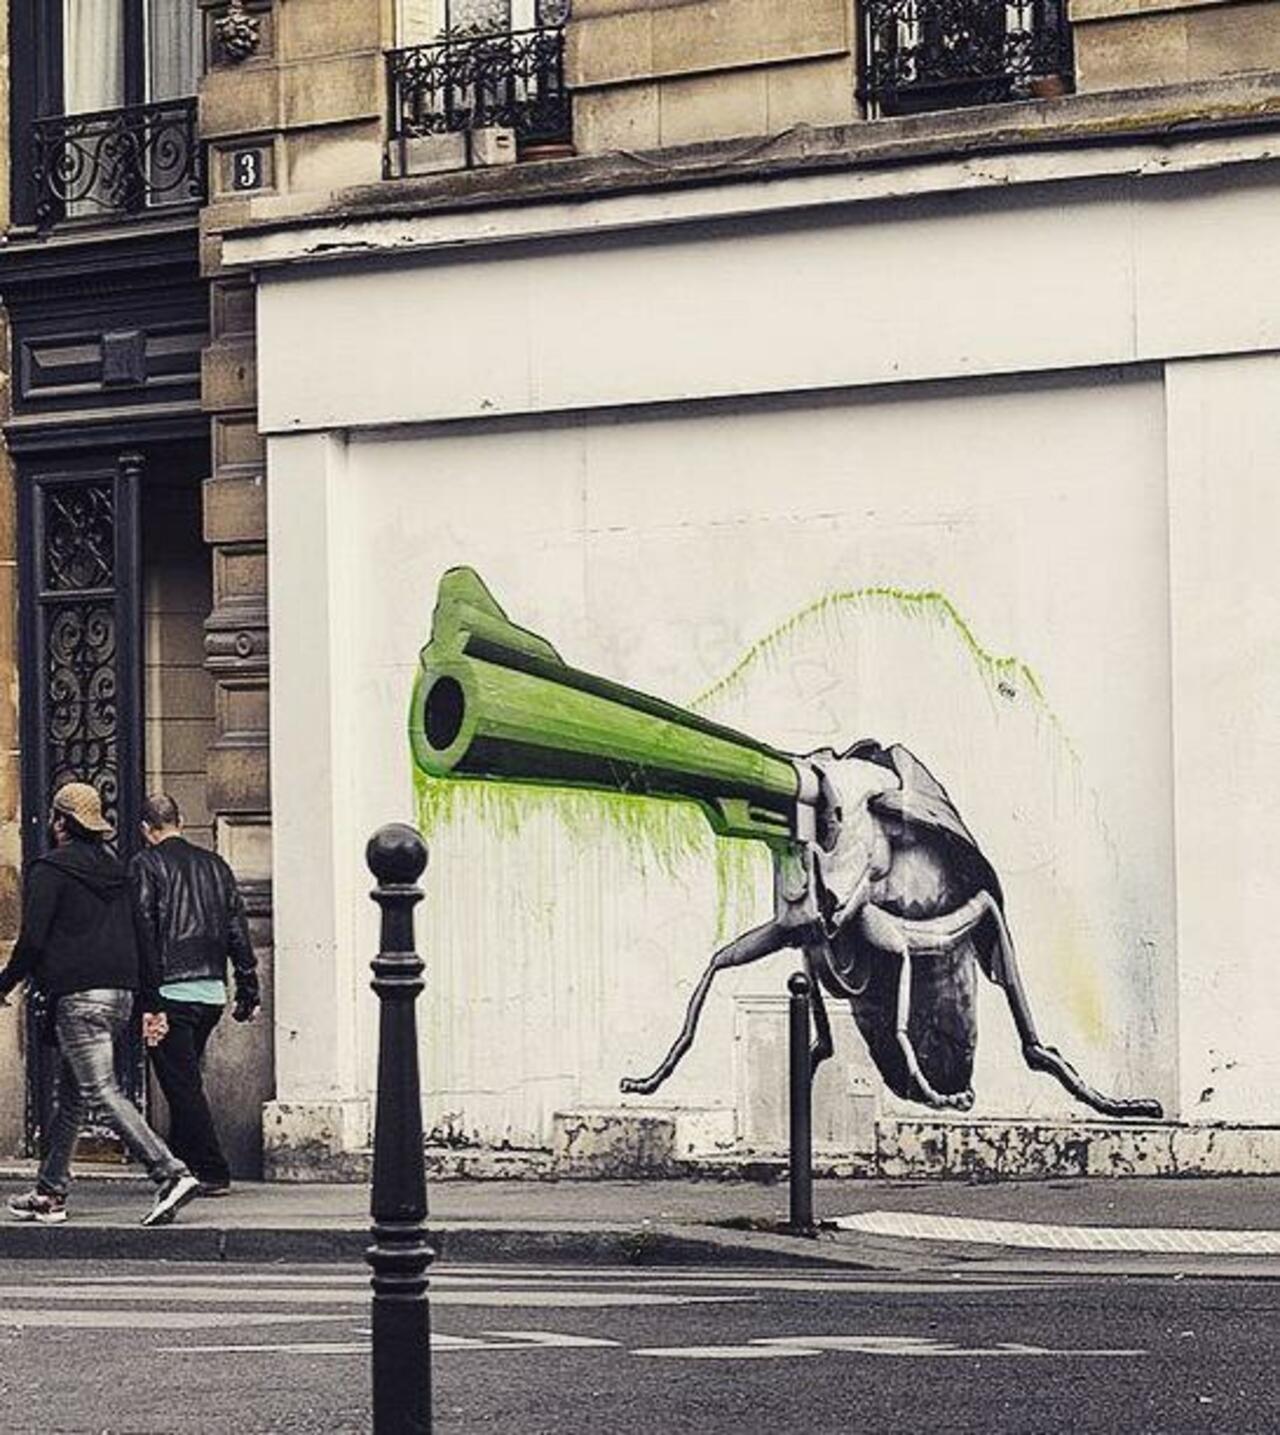 Technology merges with nature.
Street Art by Ludo in Paris 

#art #arte #graffiti #streetart http://t.co/DmYaum3mZK